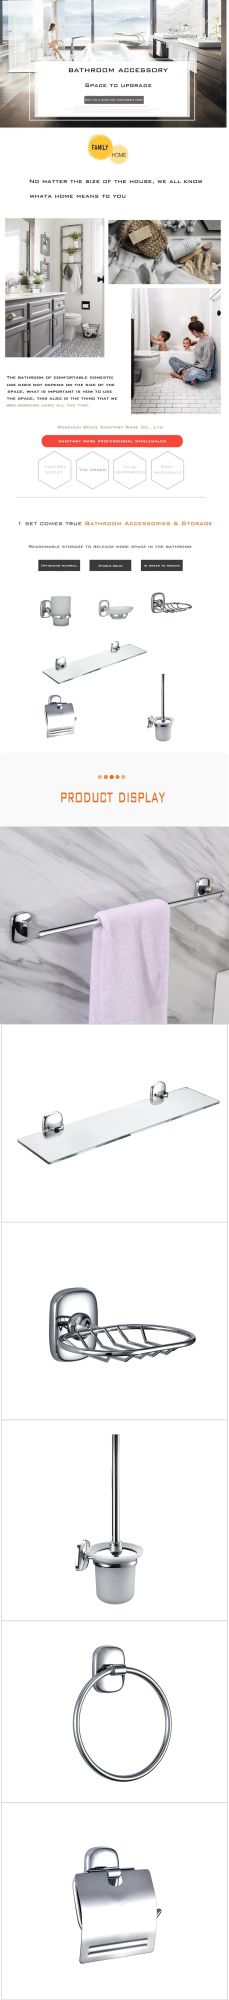 Wenzhou Factory High Quality Chrome Bathroom Accessories Zinc Alloy 6 Pieces Set